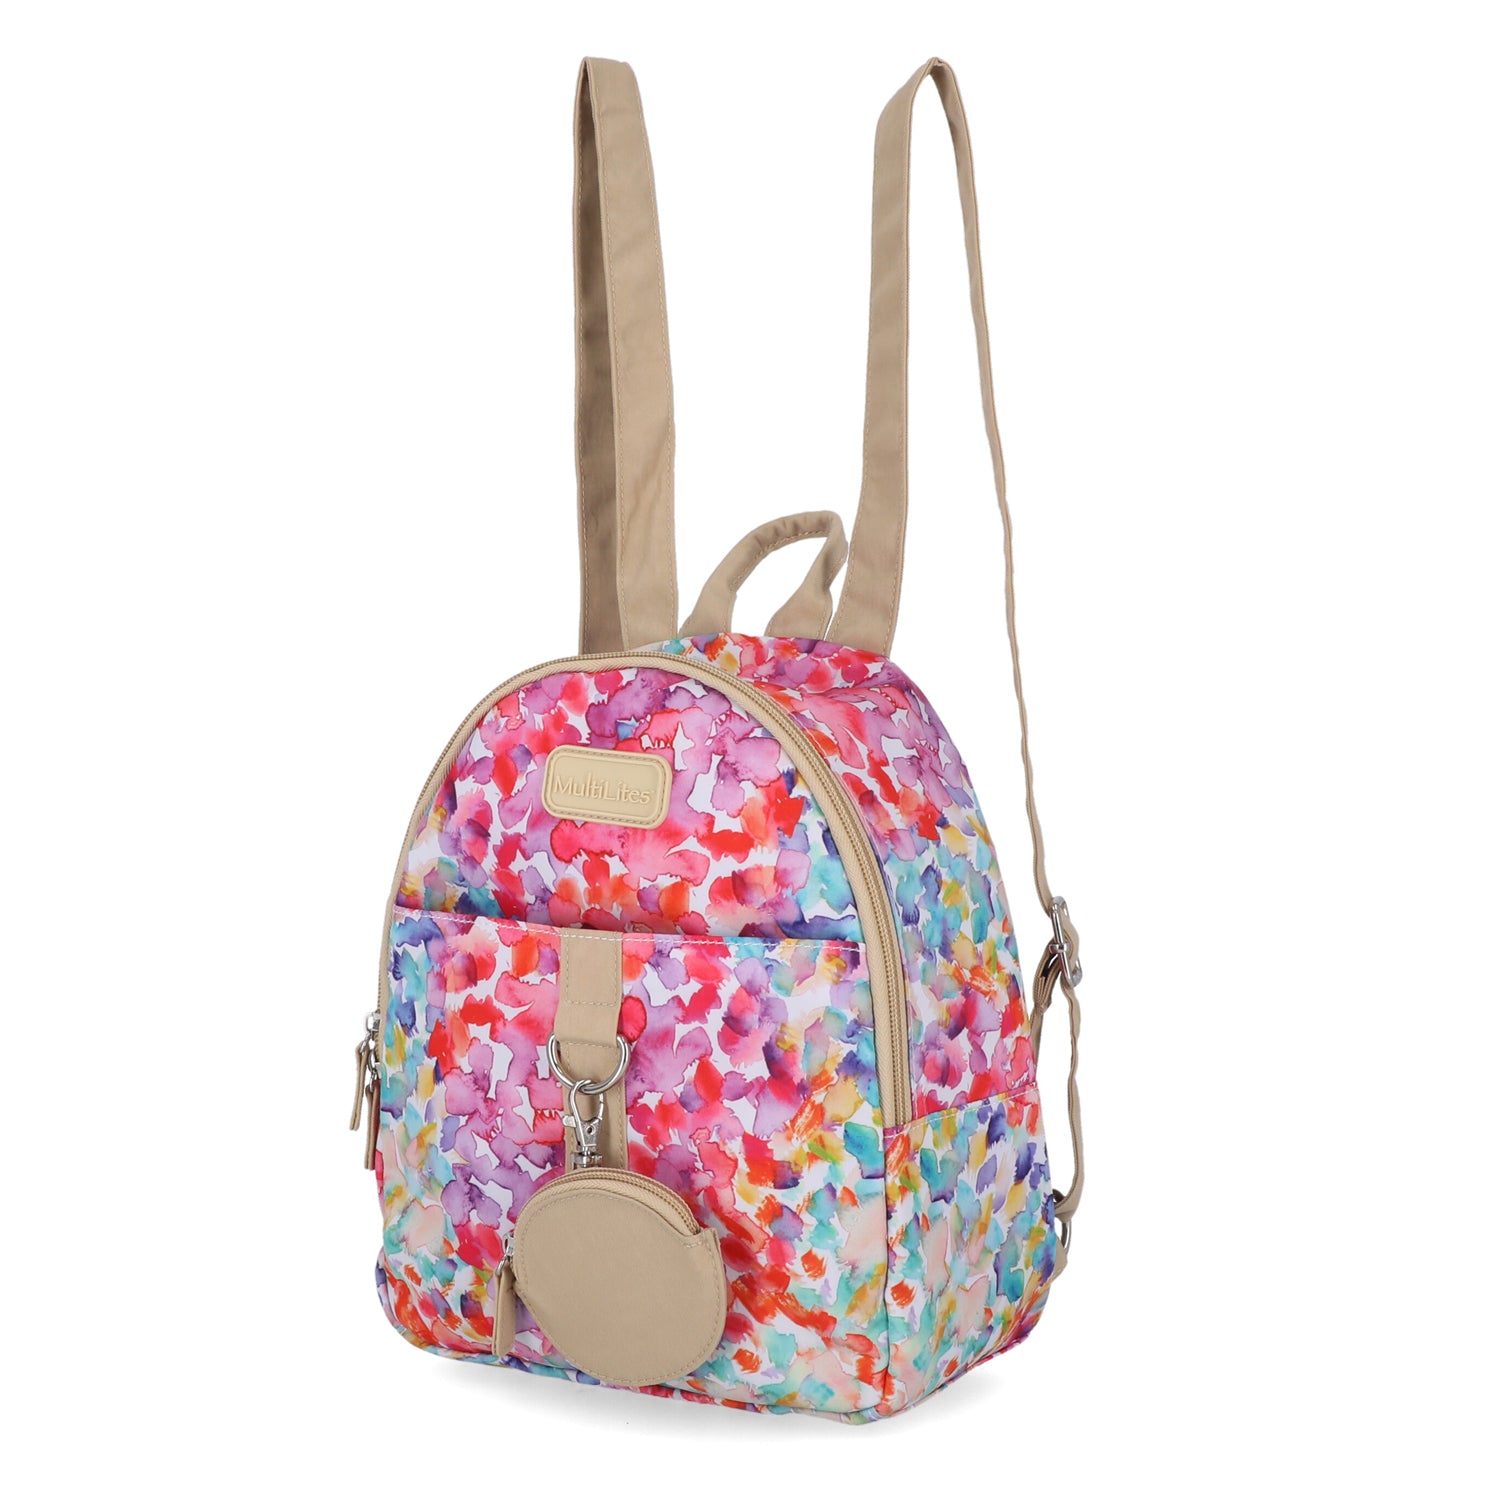 MultiSac Women's Backpack Bag Purse Floral